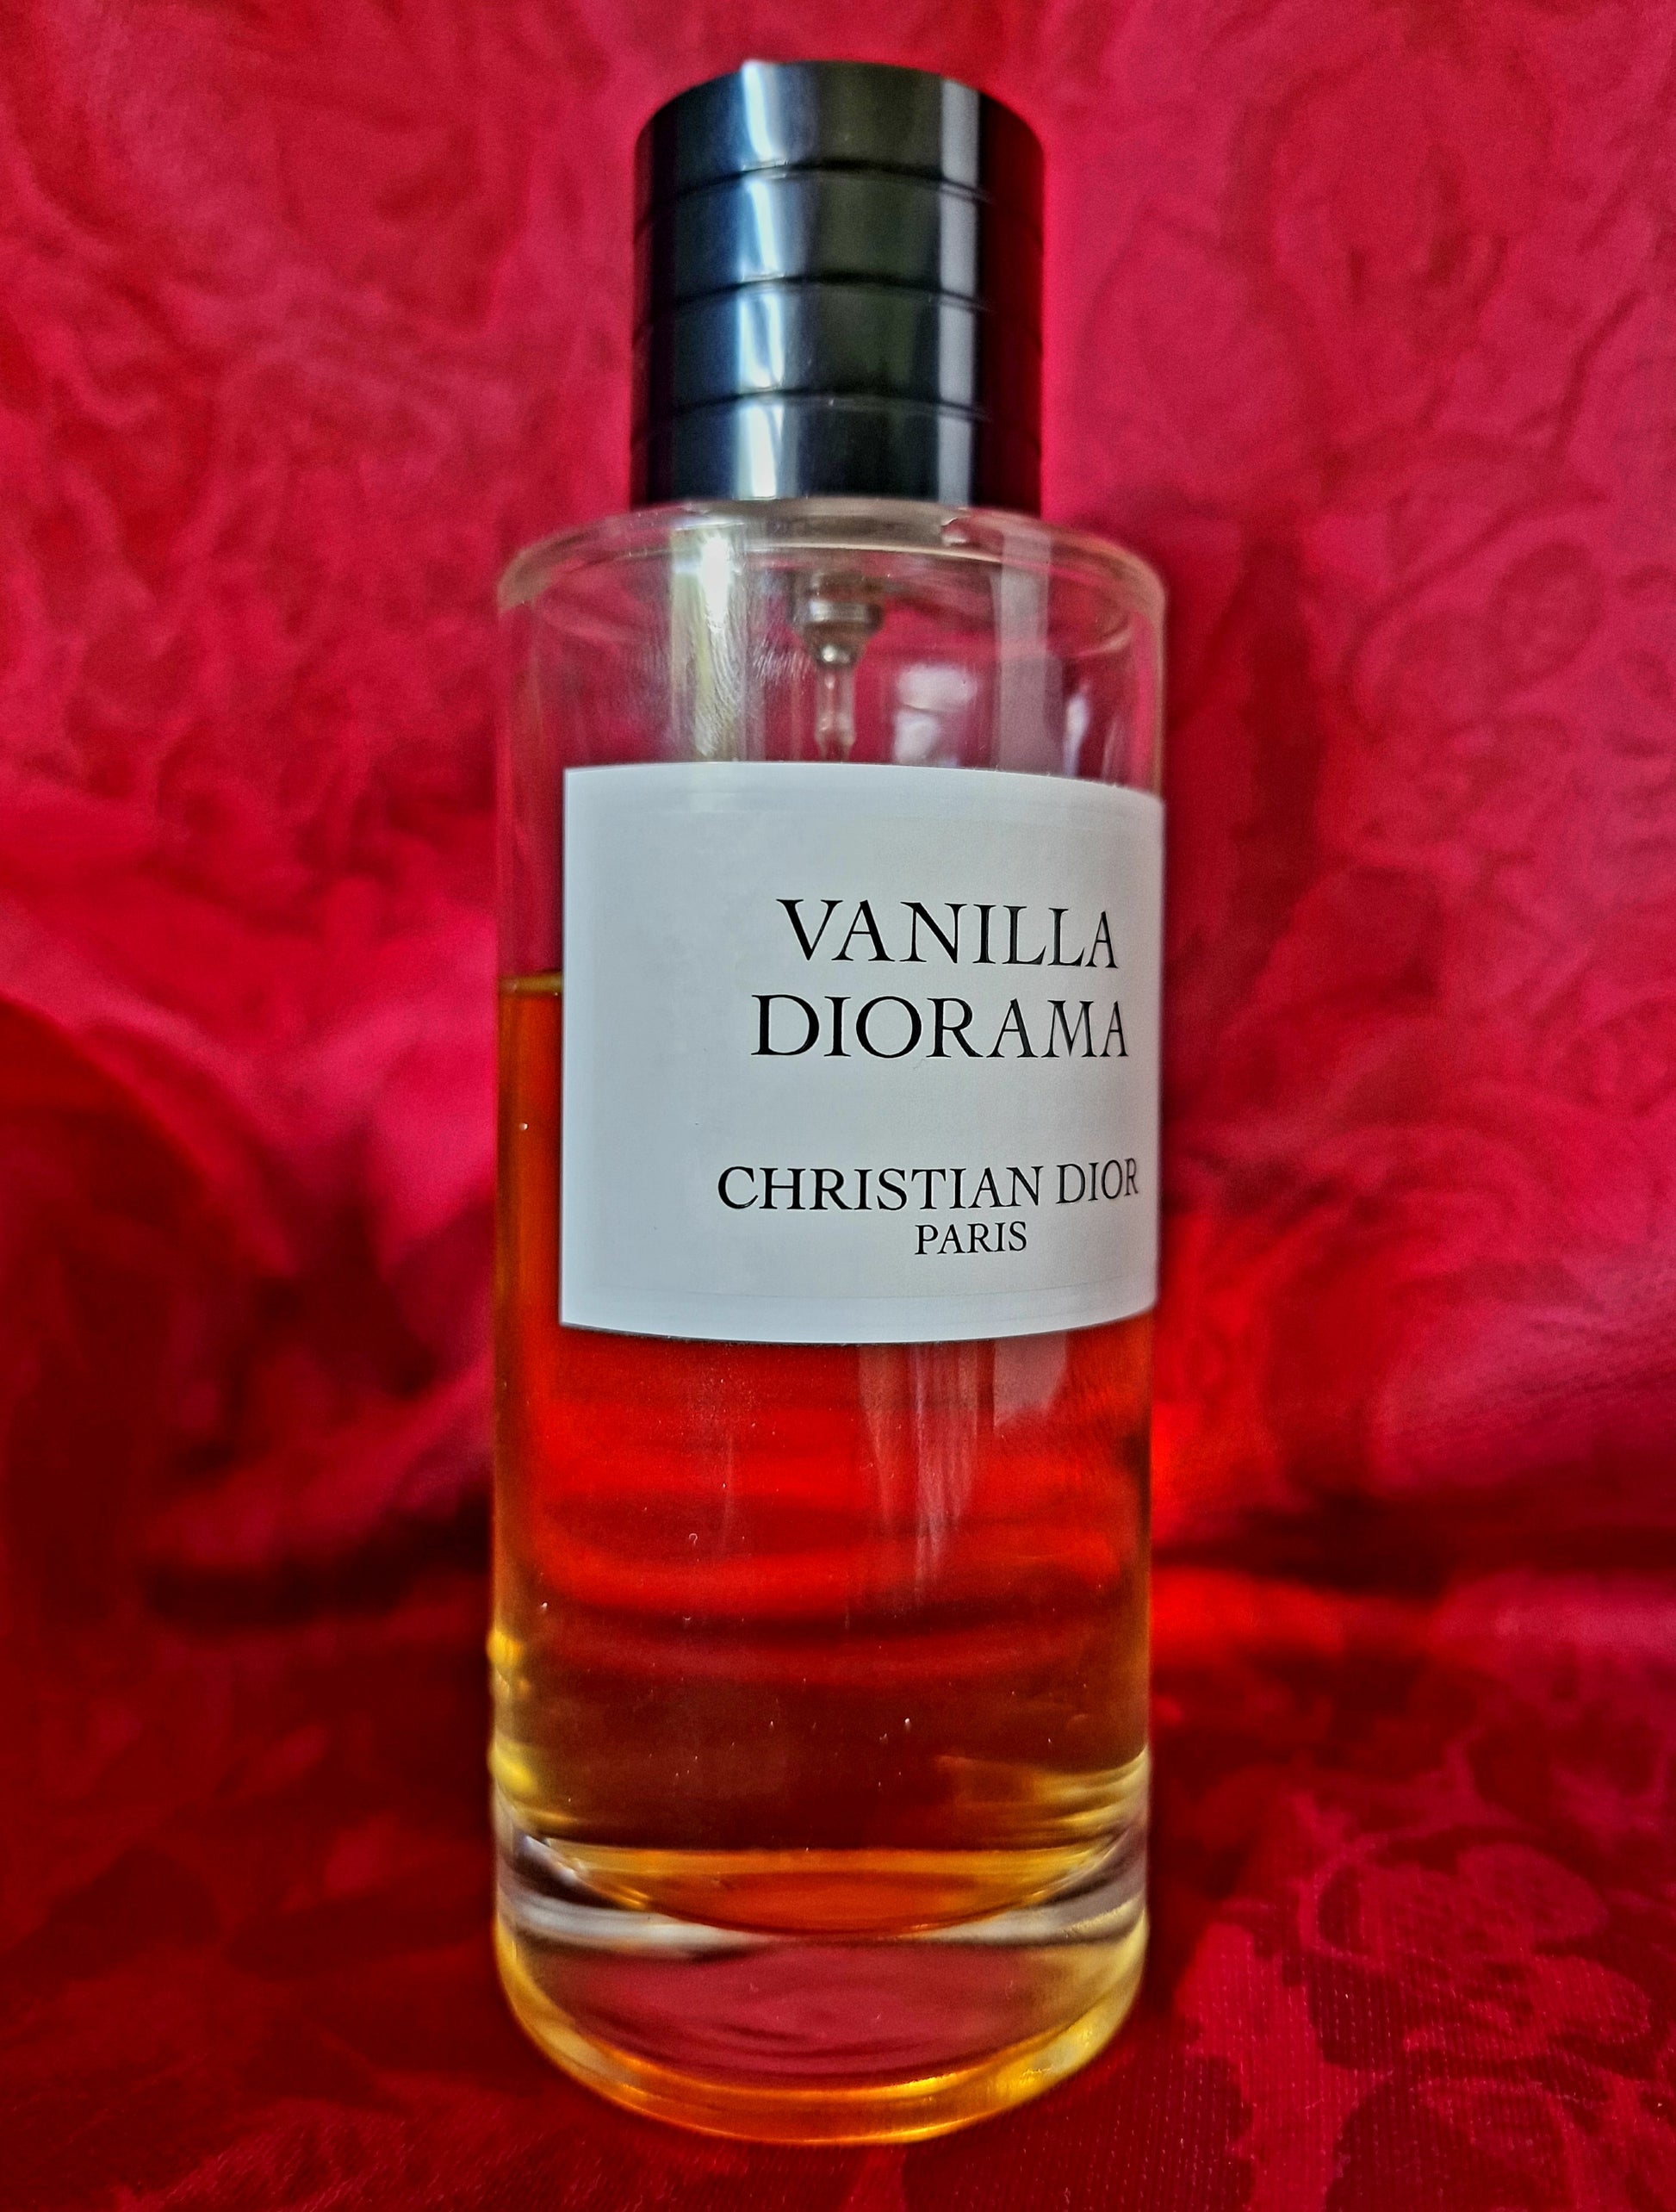 Louis Vuitton Perfume Samples -  UK